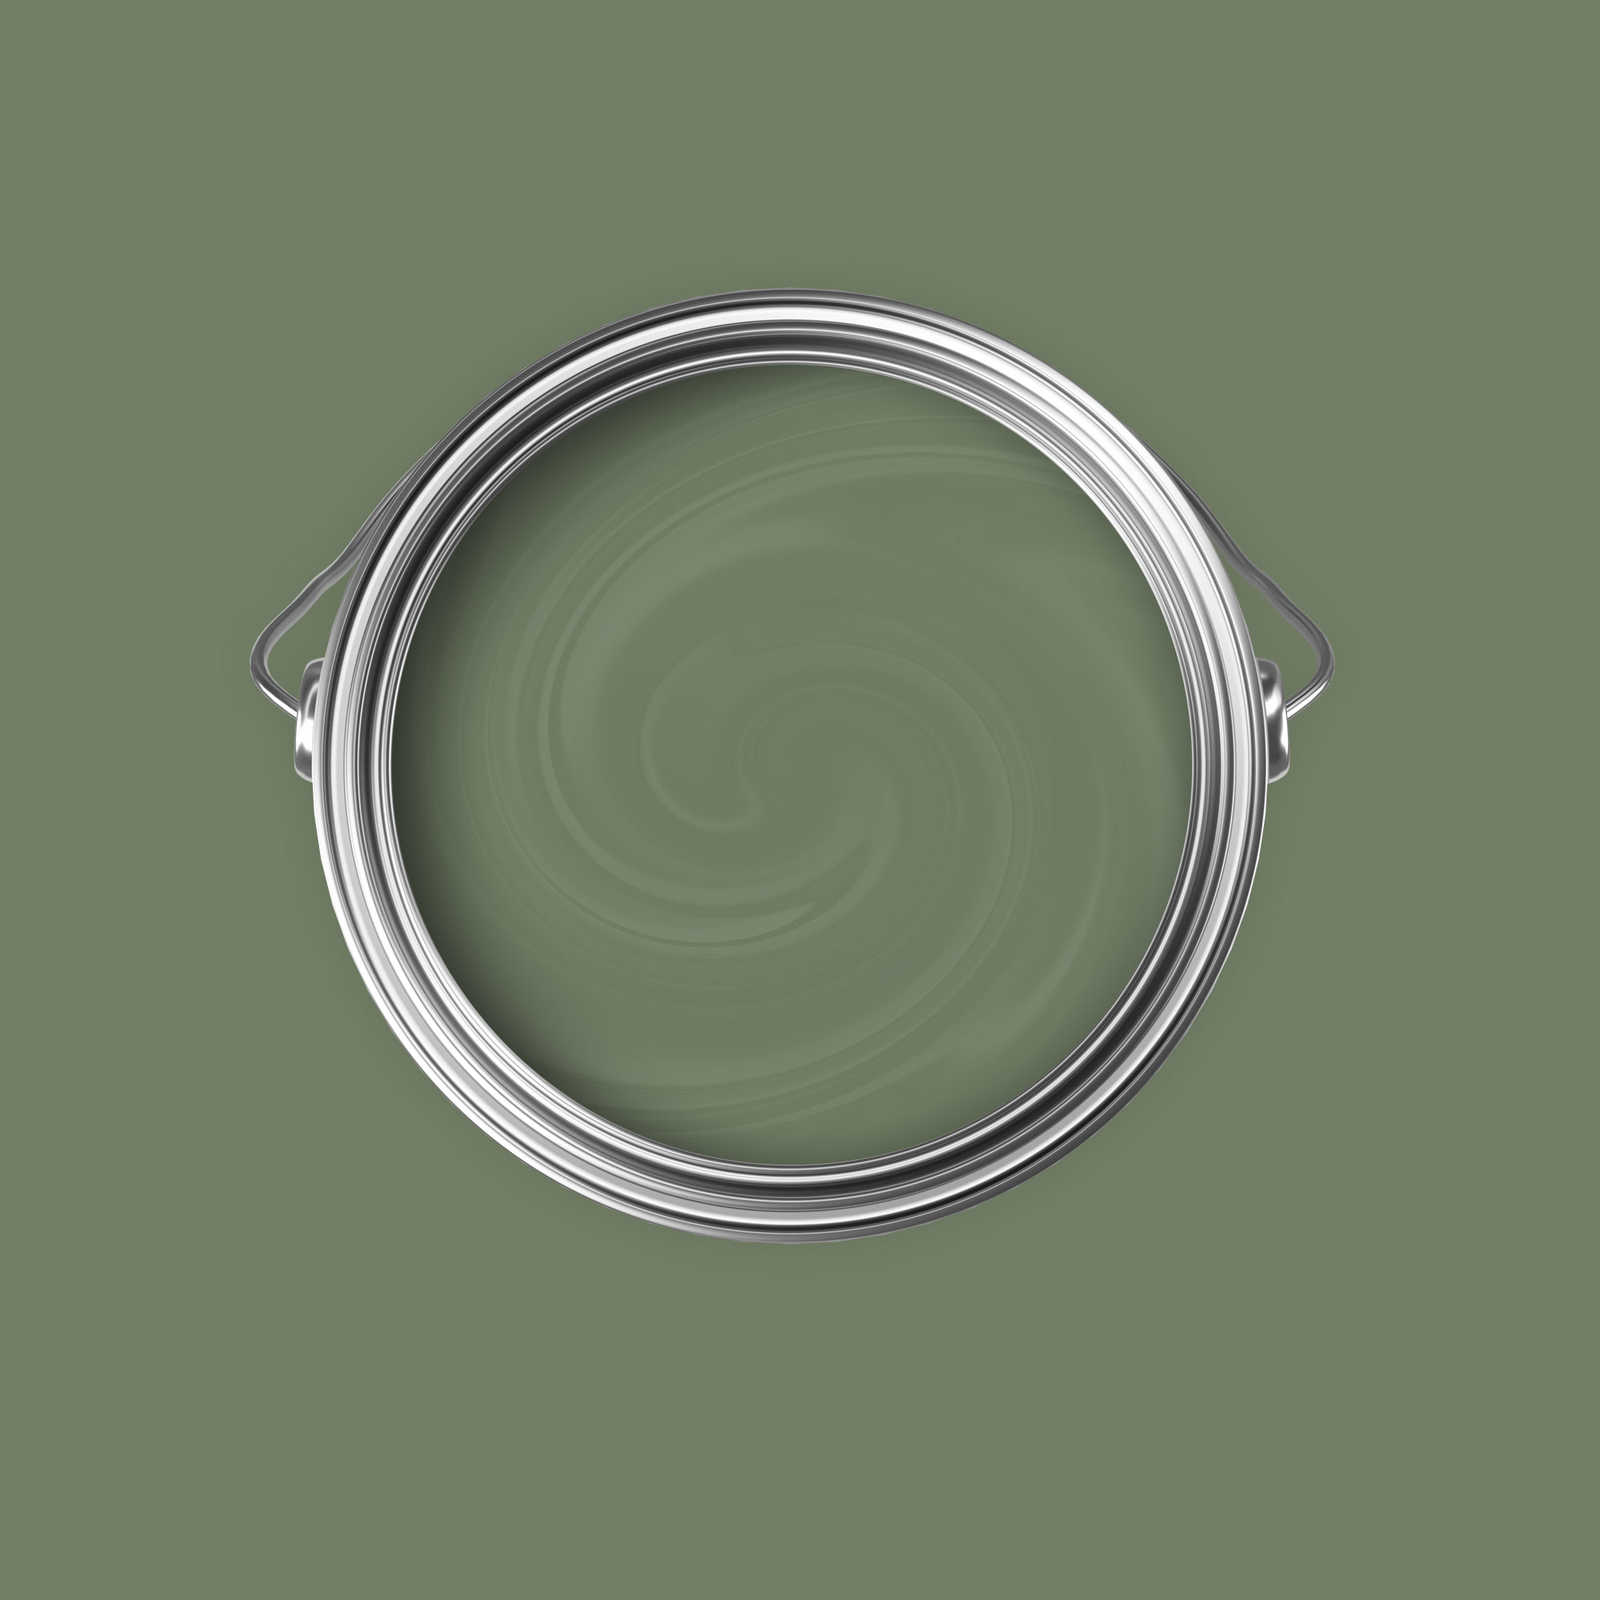             Peinture murale Premium vert olive relaxant »Gorgeous Green« NW504 – 5 litres
        